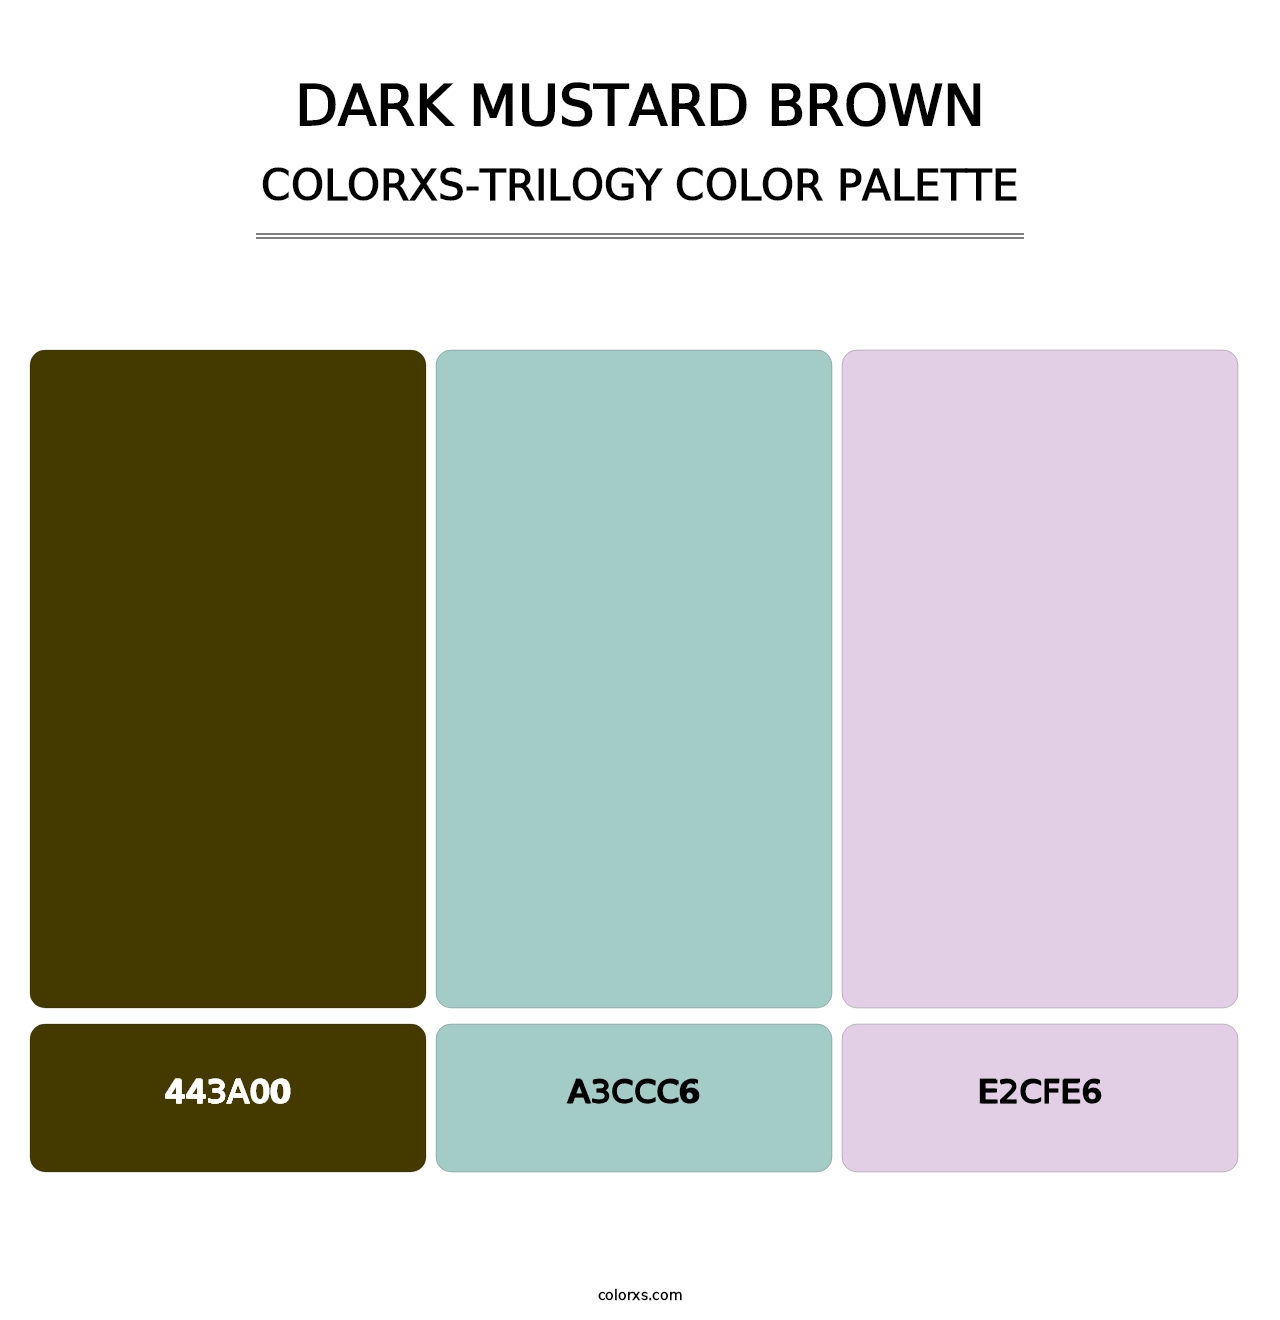 Dark Mustard Brown - Colorxs Trilogy Palette